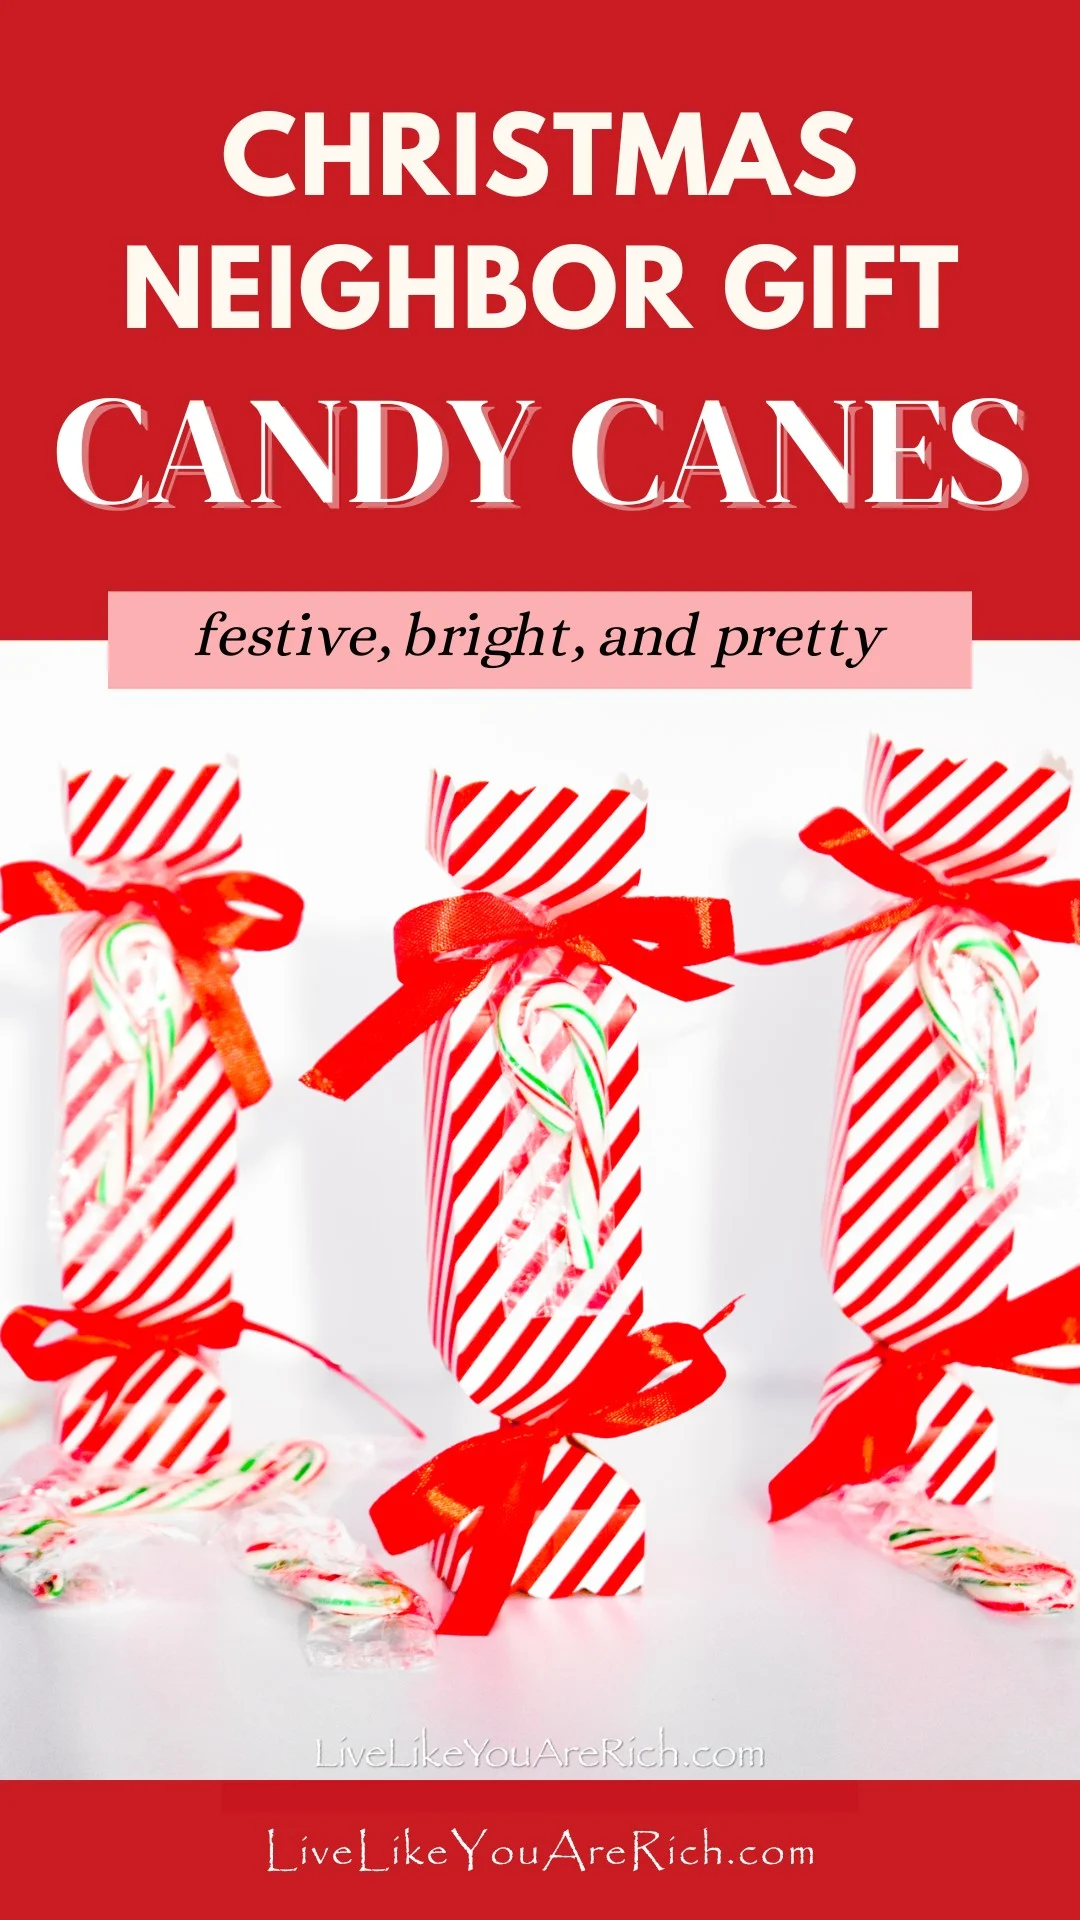 Neighbor Christmas Gift: Candy Canes